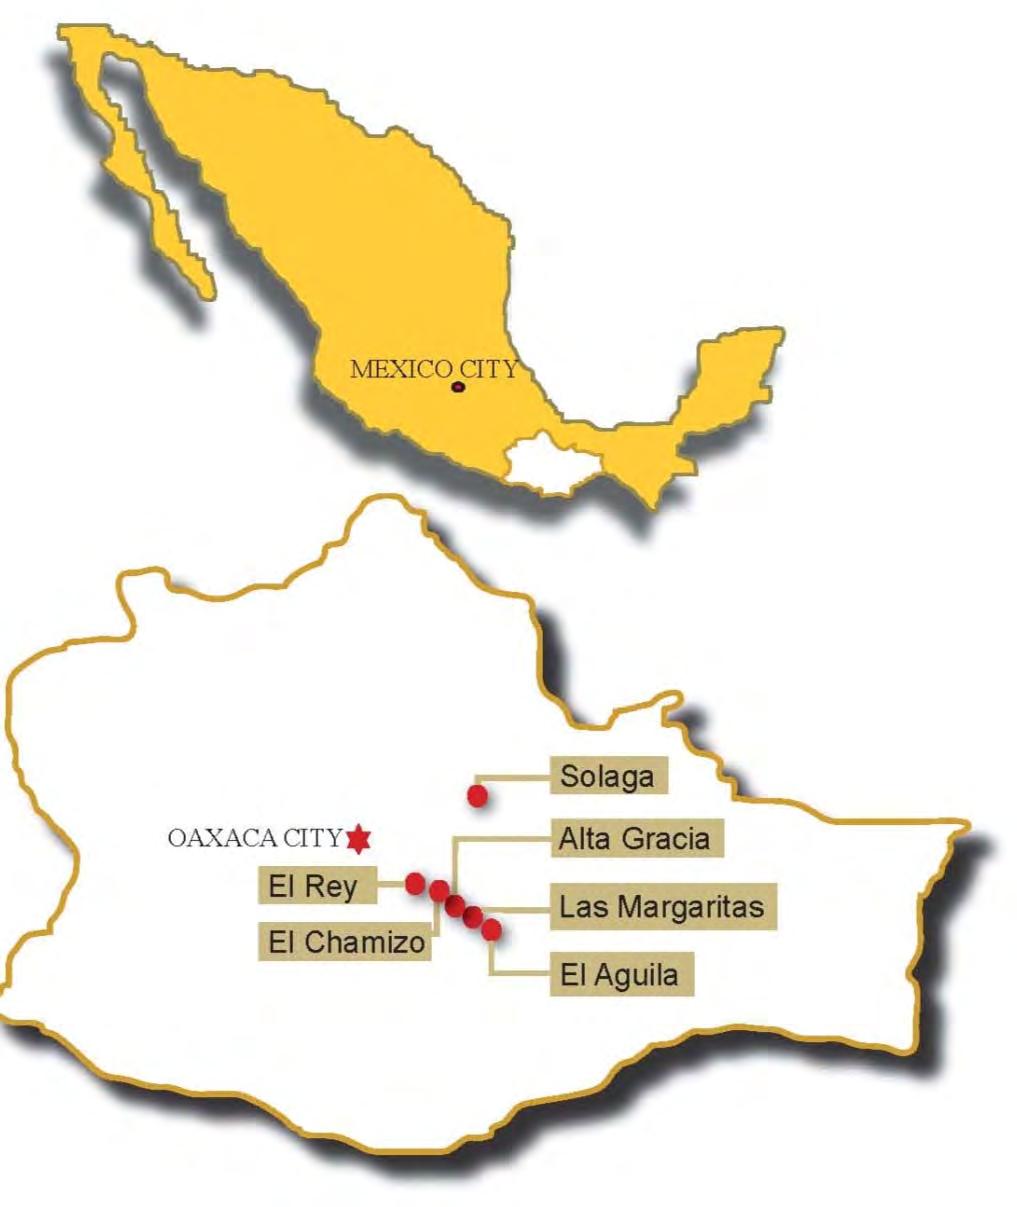 Oaxaca Mining Unit Mining friendly jurisdiction 6 potential high grade gold and silver